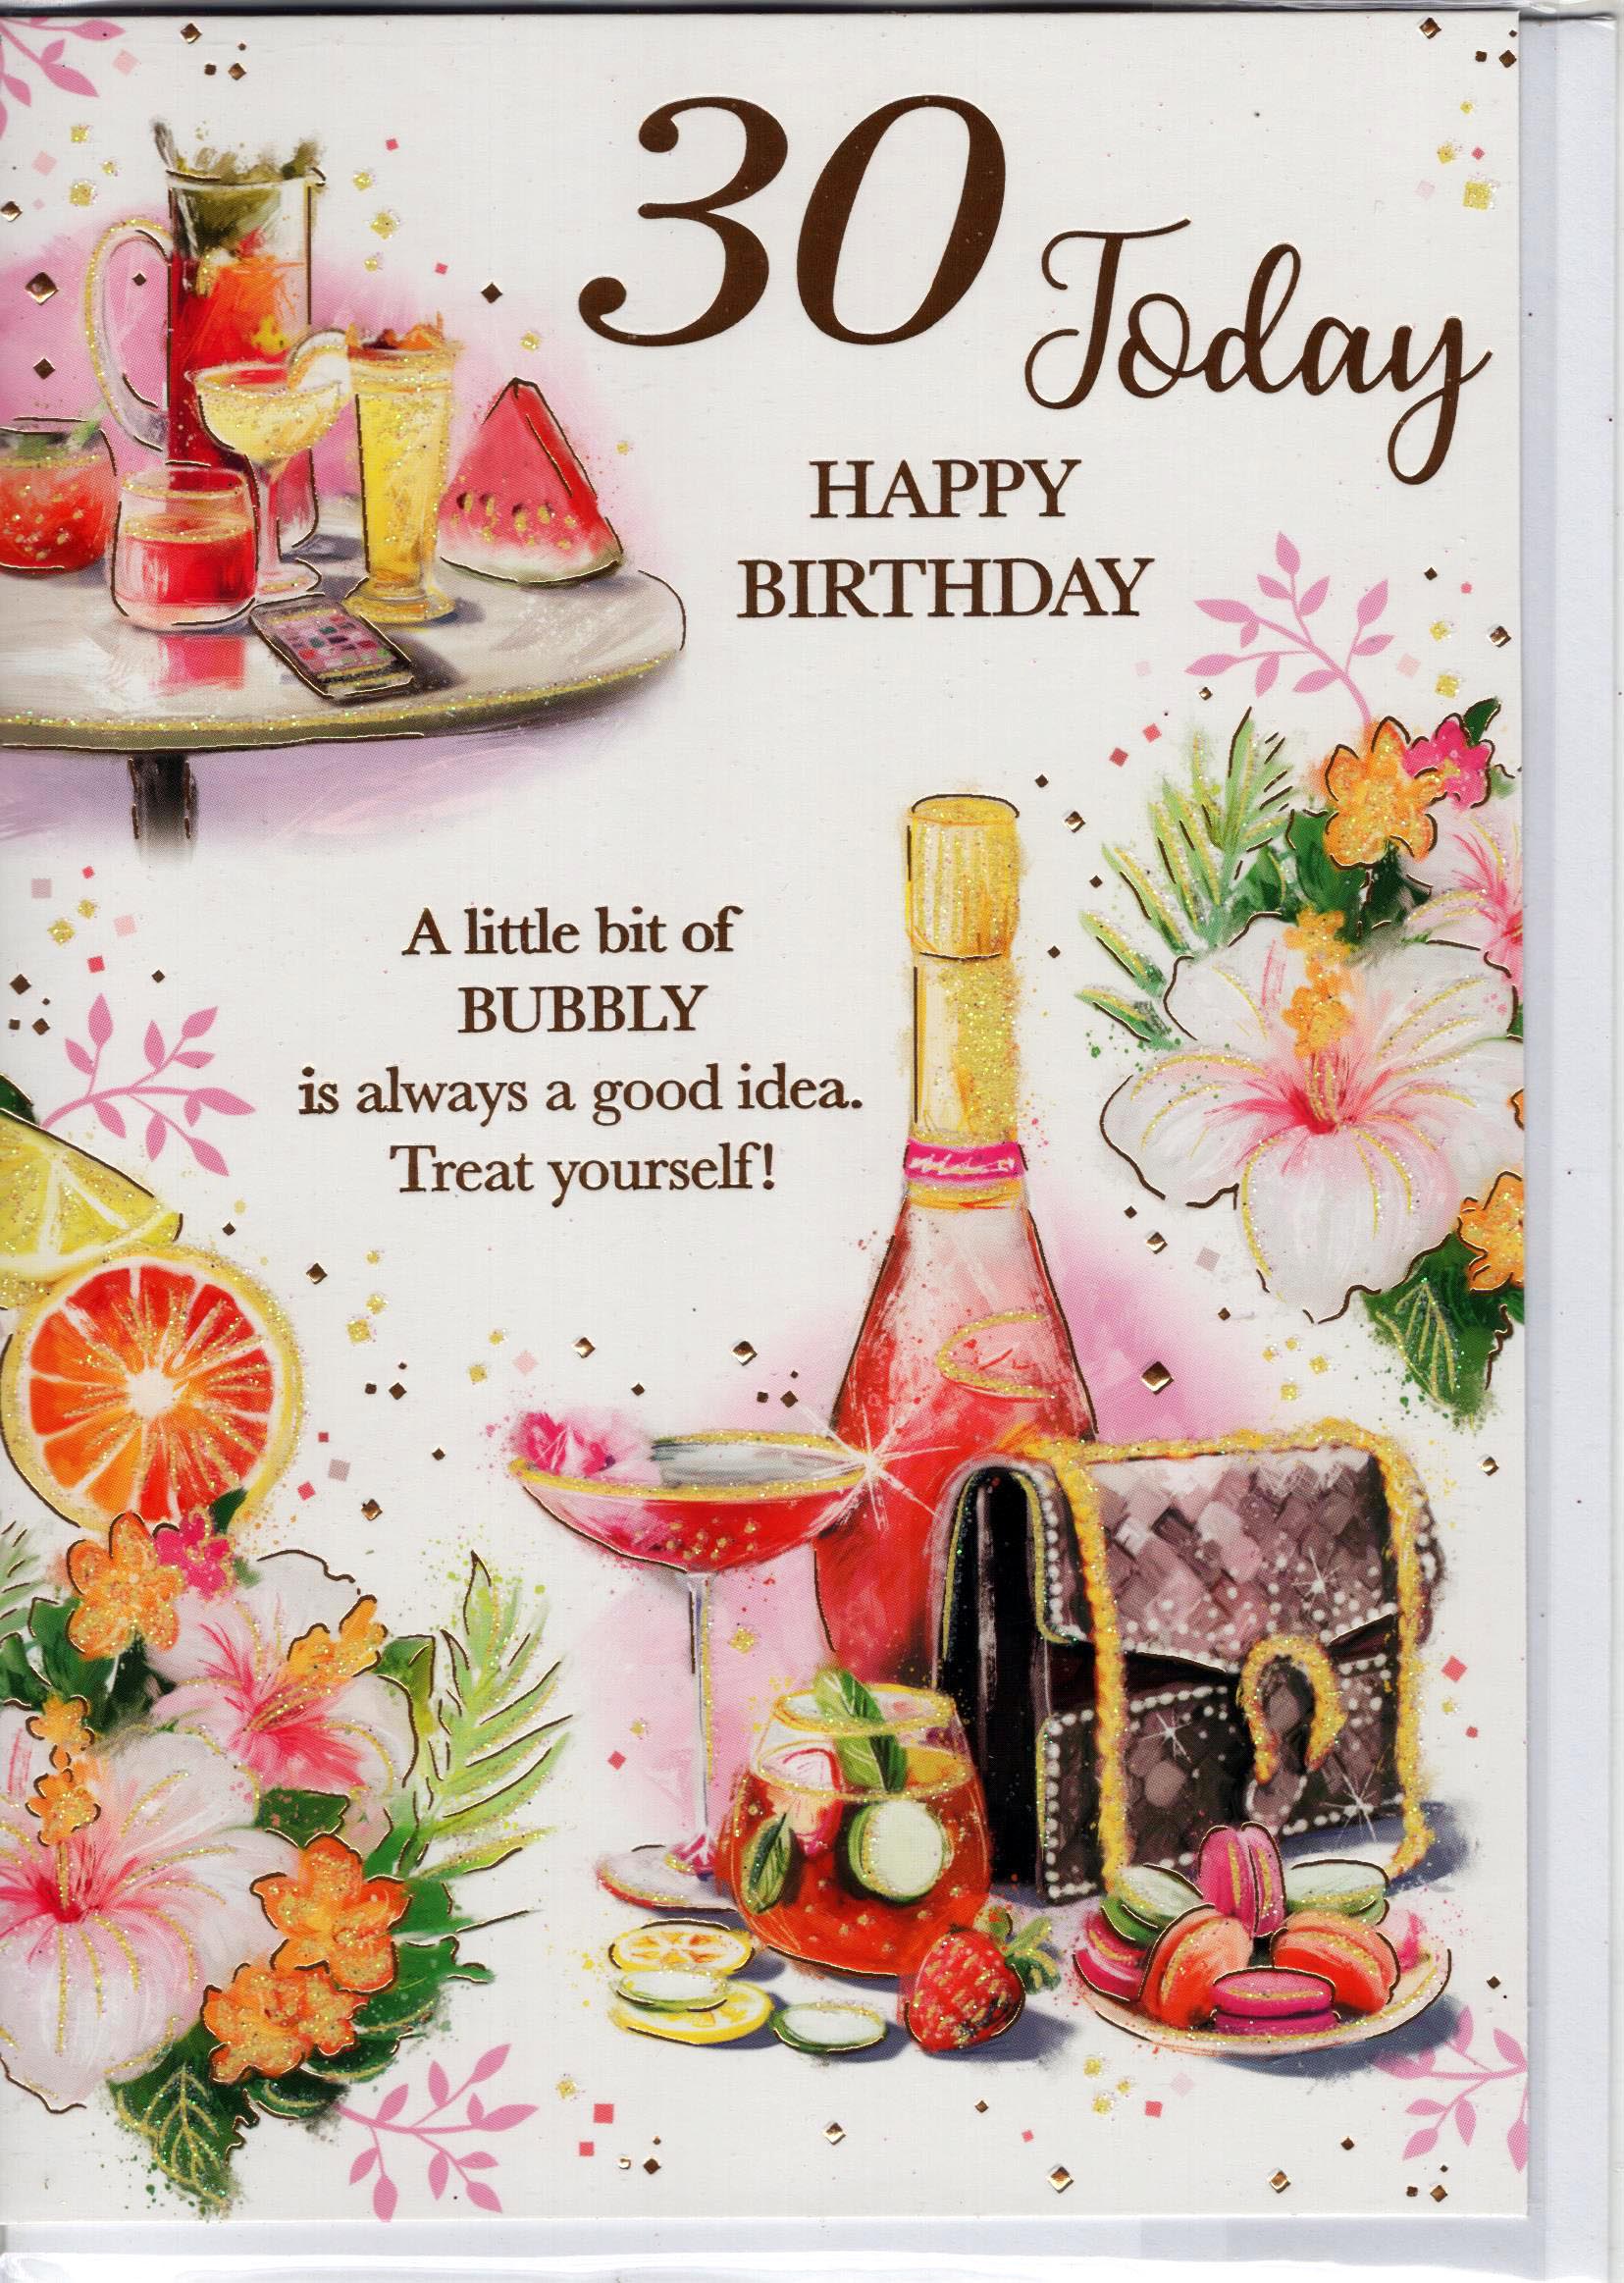 30 Today Happy Birthday Greeting Card